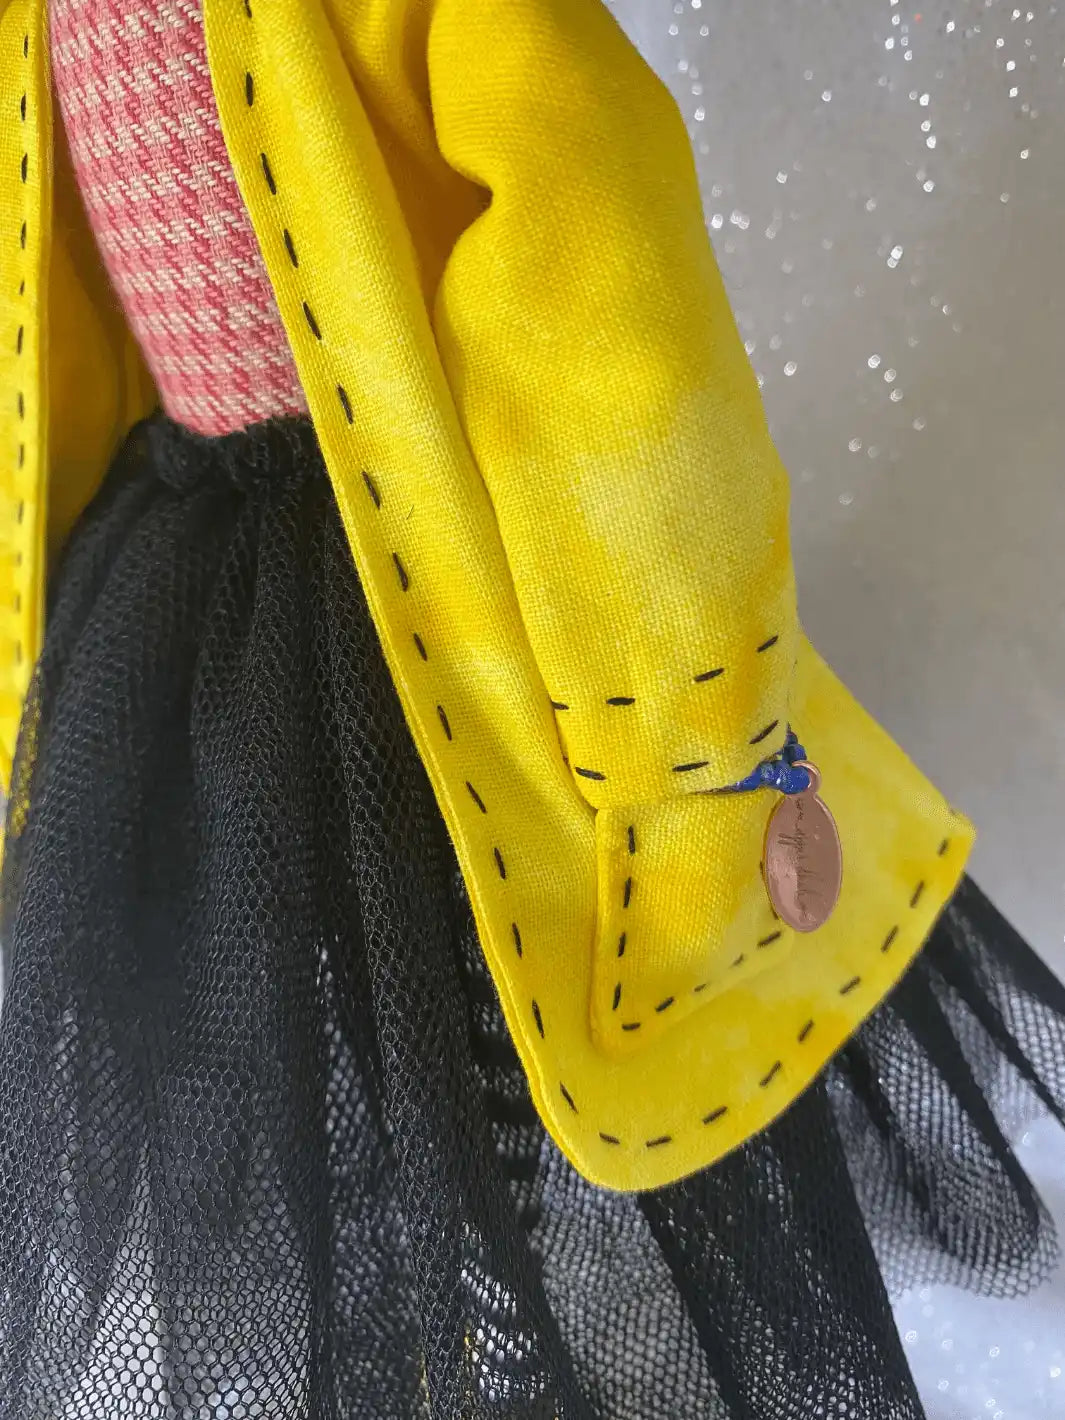 Coraline handmade doll yellow jacket stitching detail